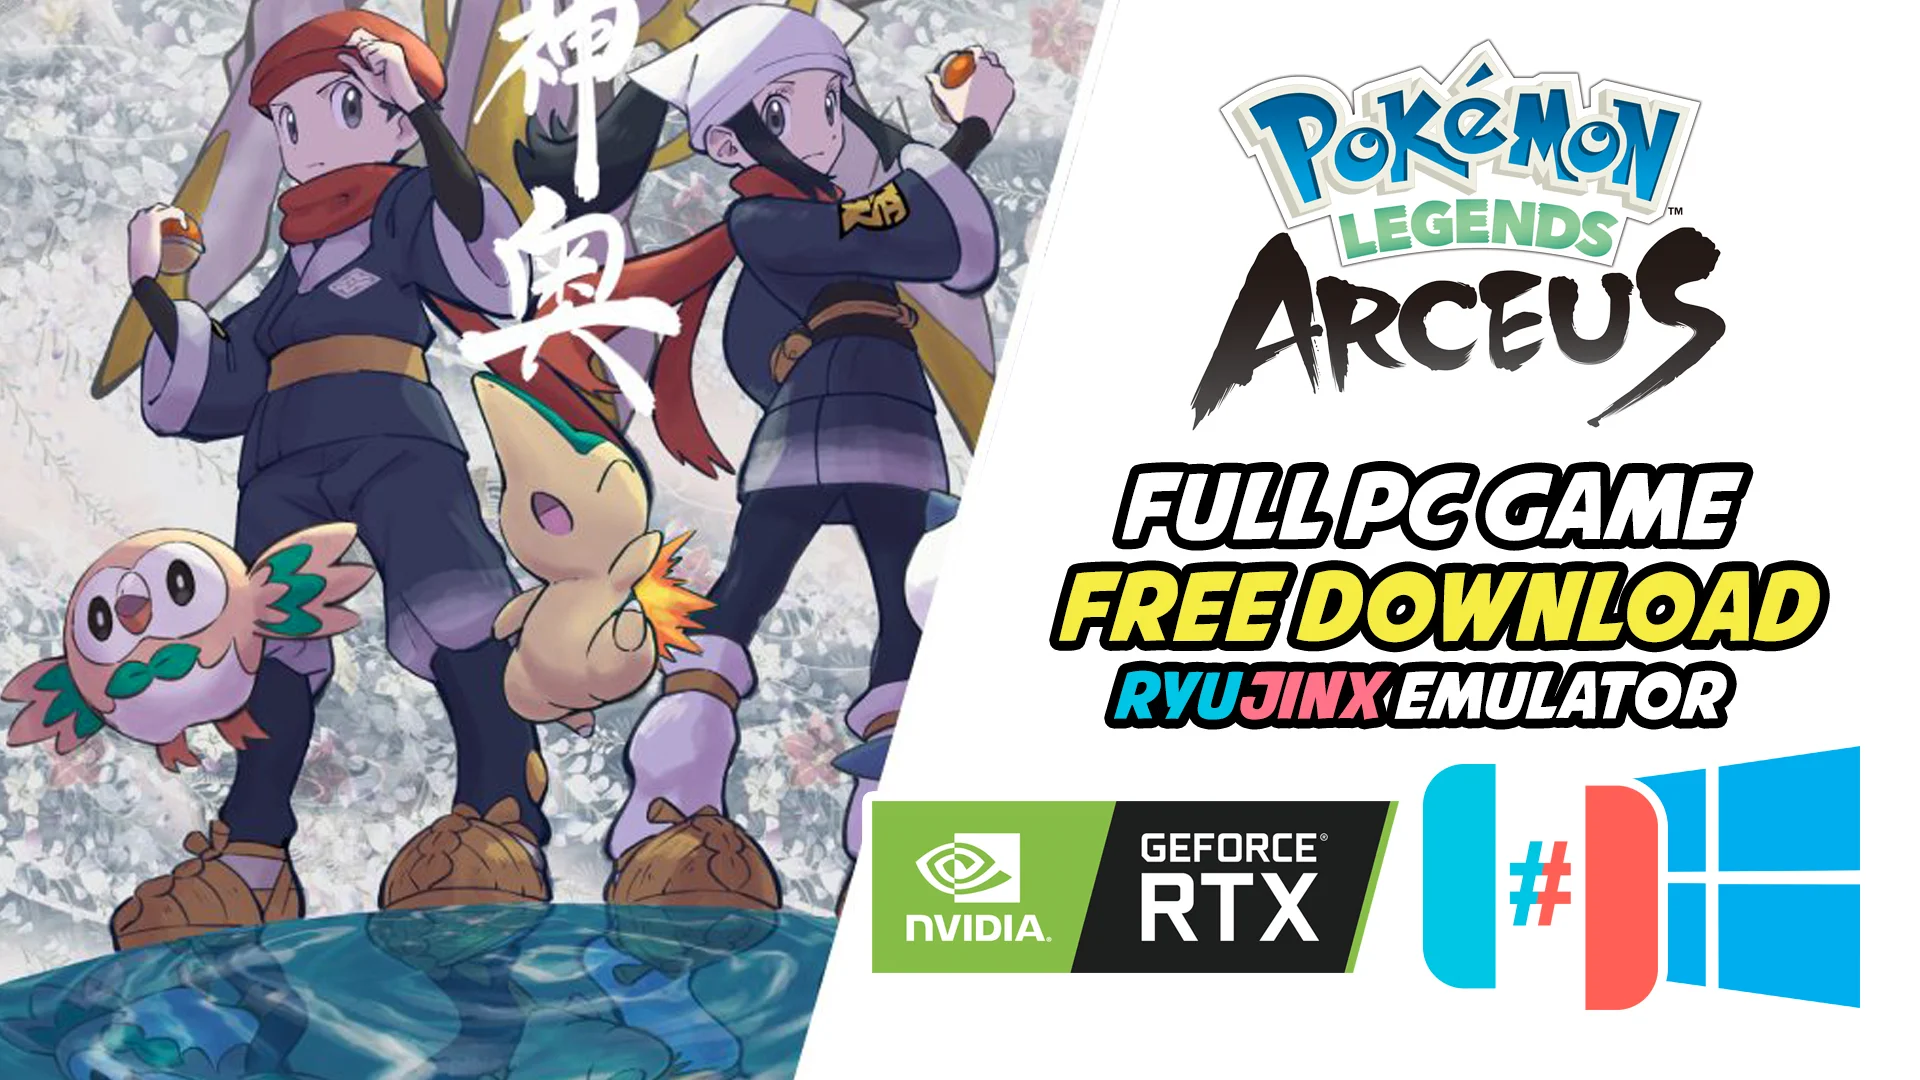 Pokémon Legends Arceus Yuzu Gameplay & Installation Guide for PC on Vimeo